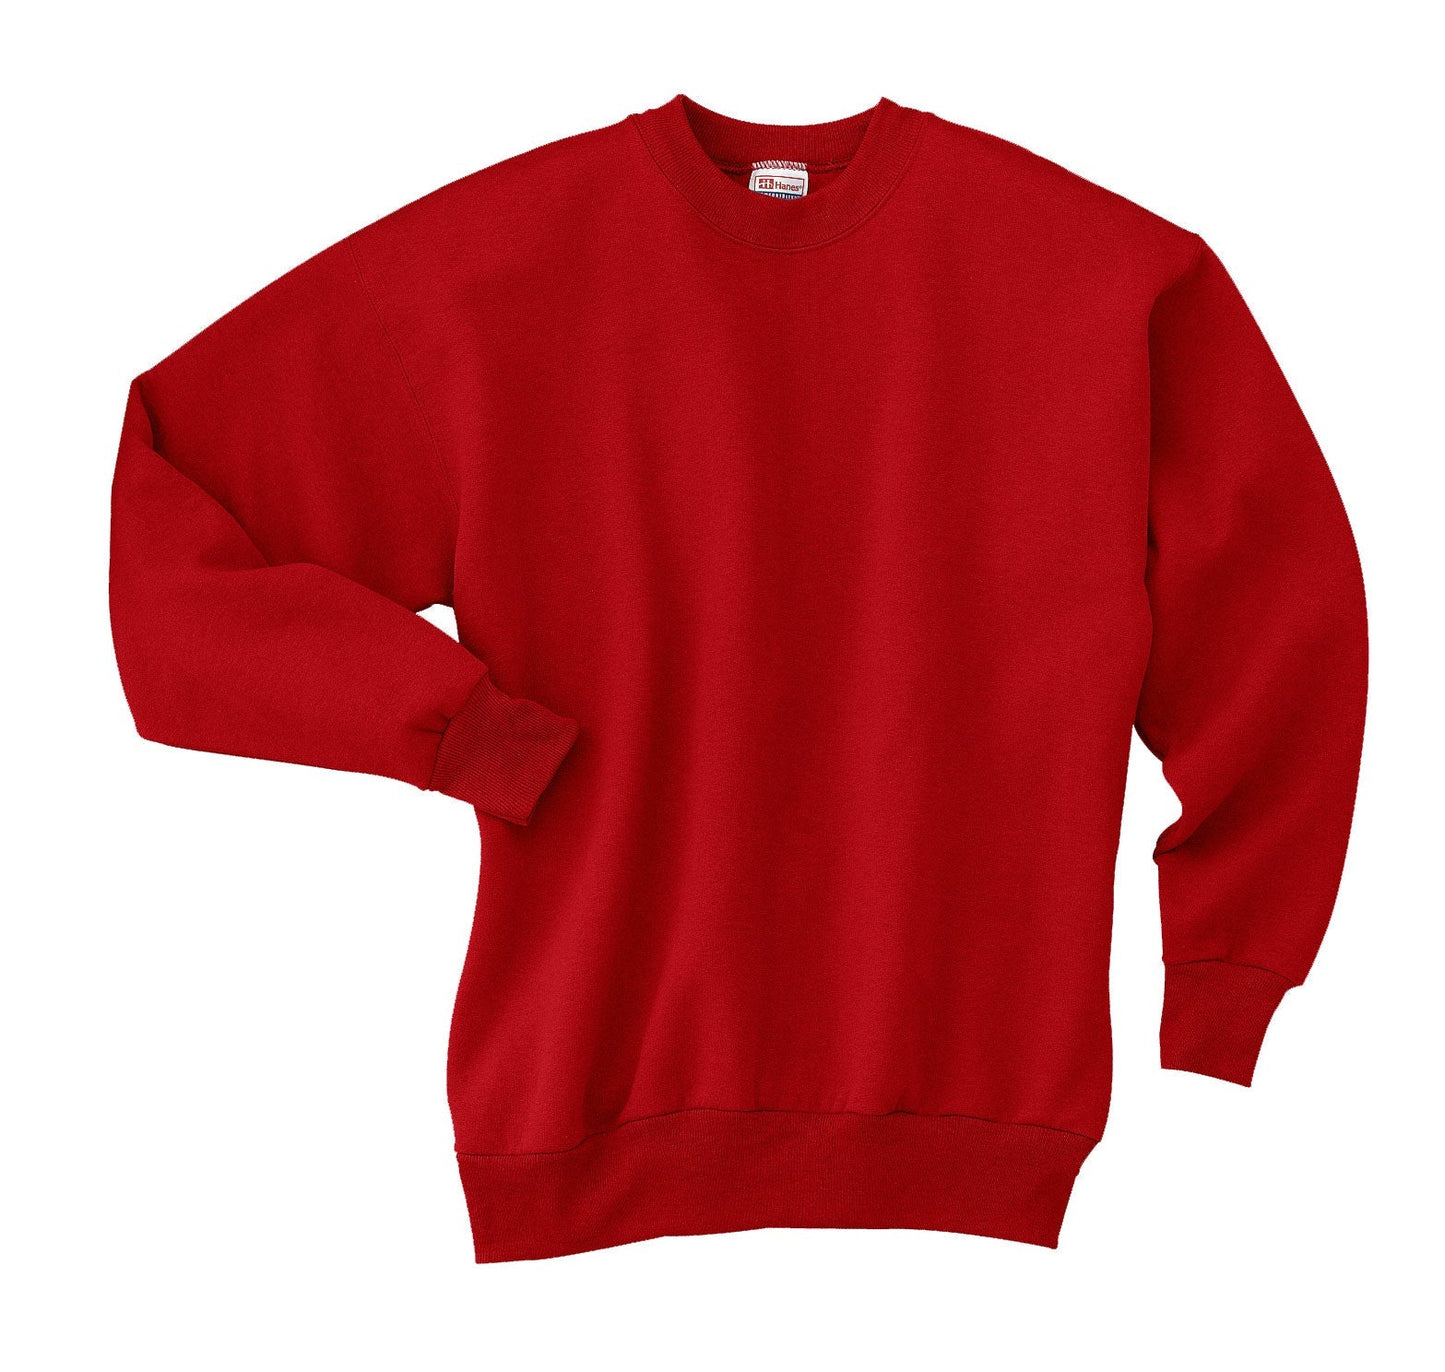 Jackson Intermediate Disressed Crewneck Sweatshirt- JIS